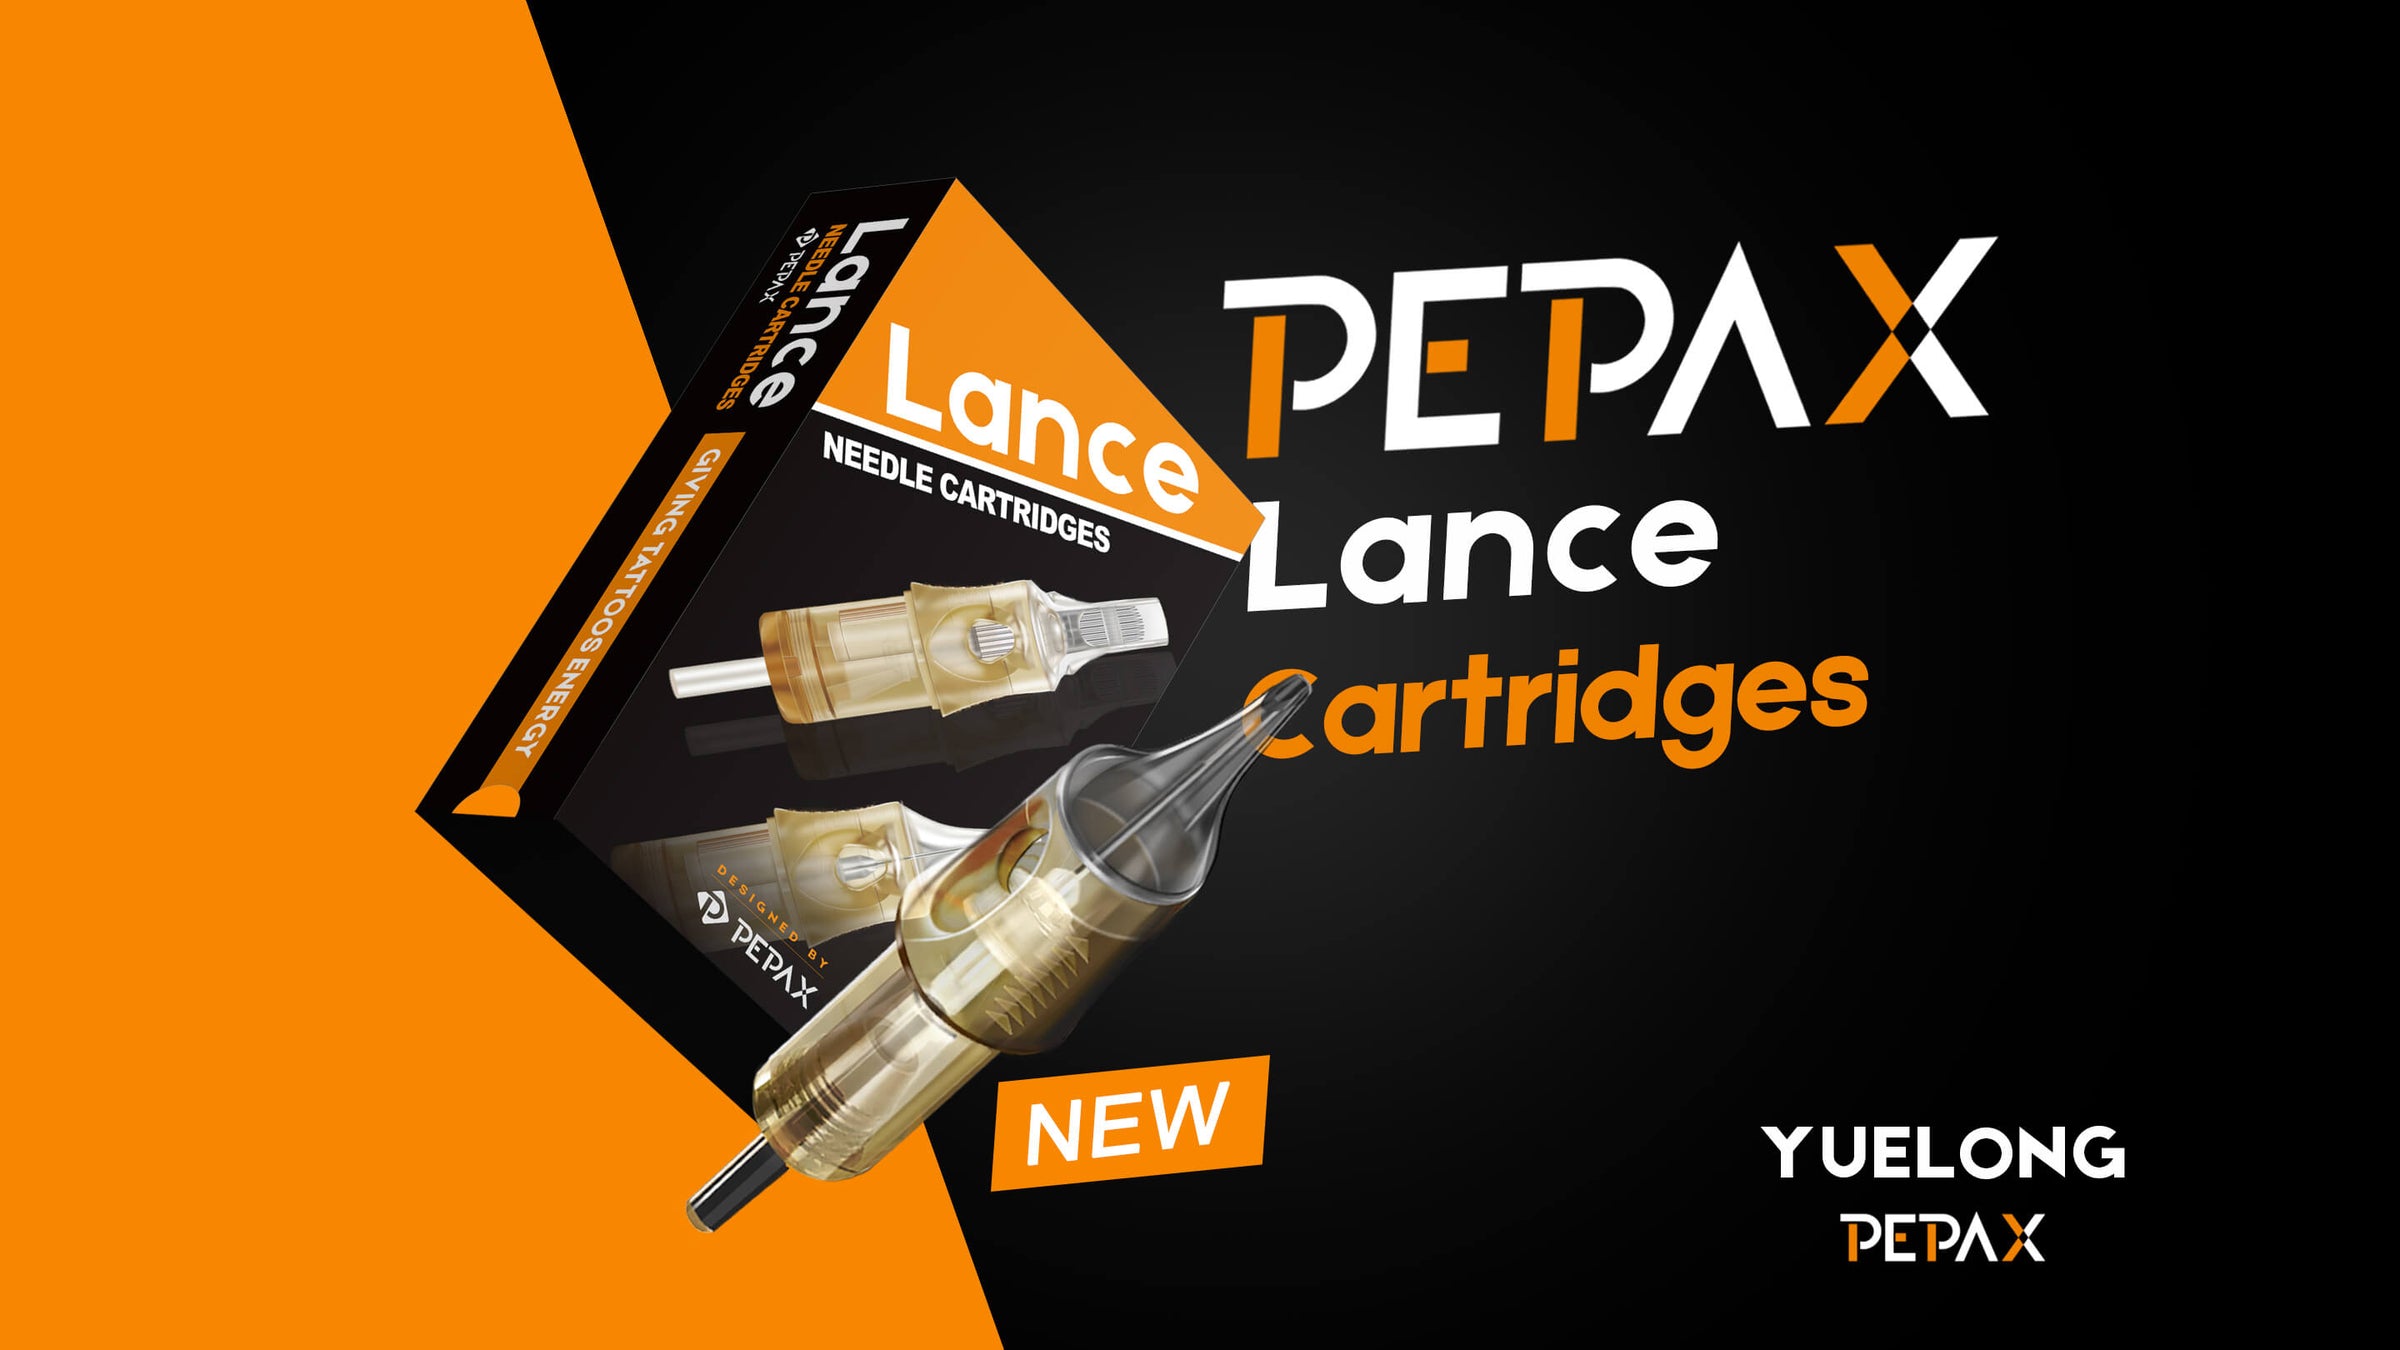 pepax lance cartridge 